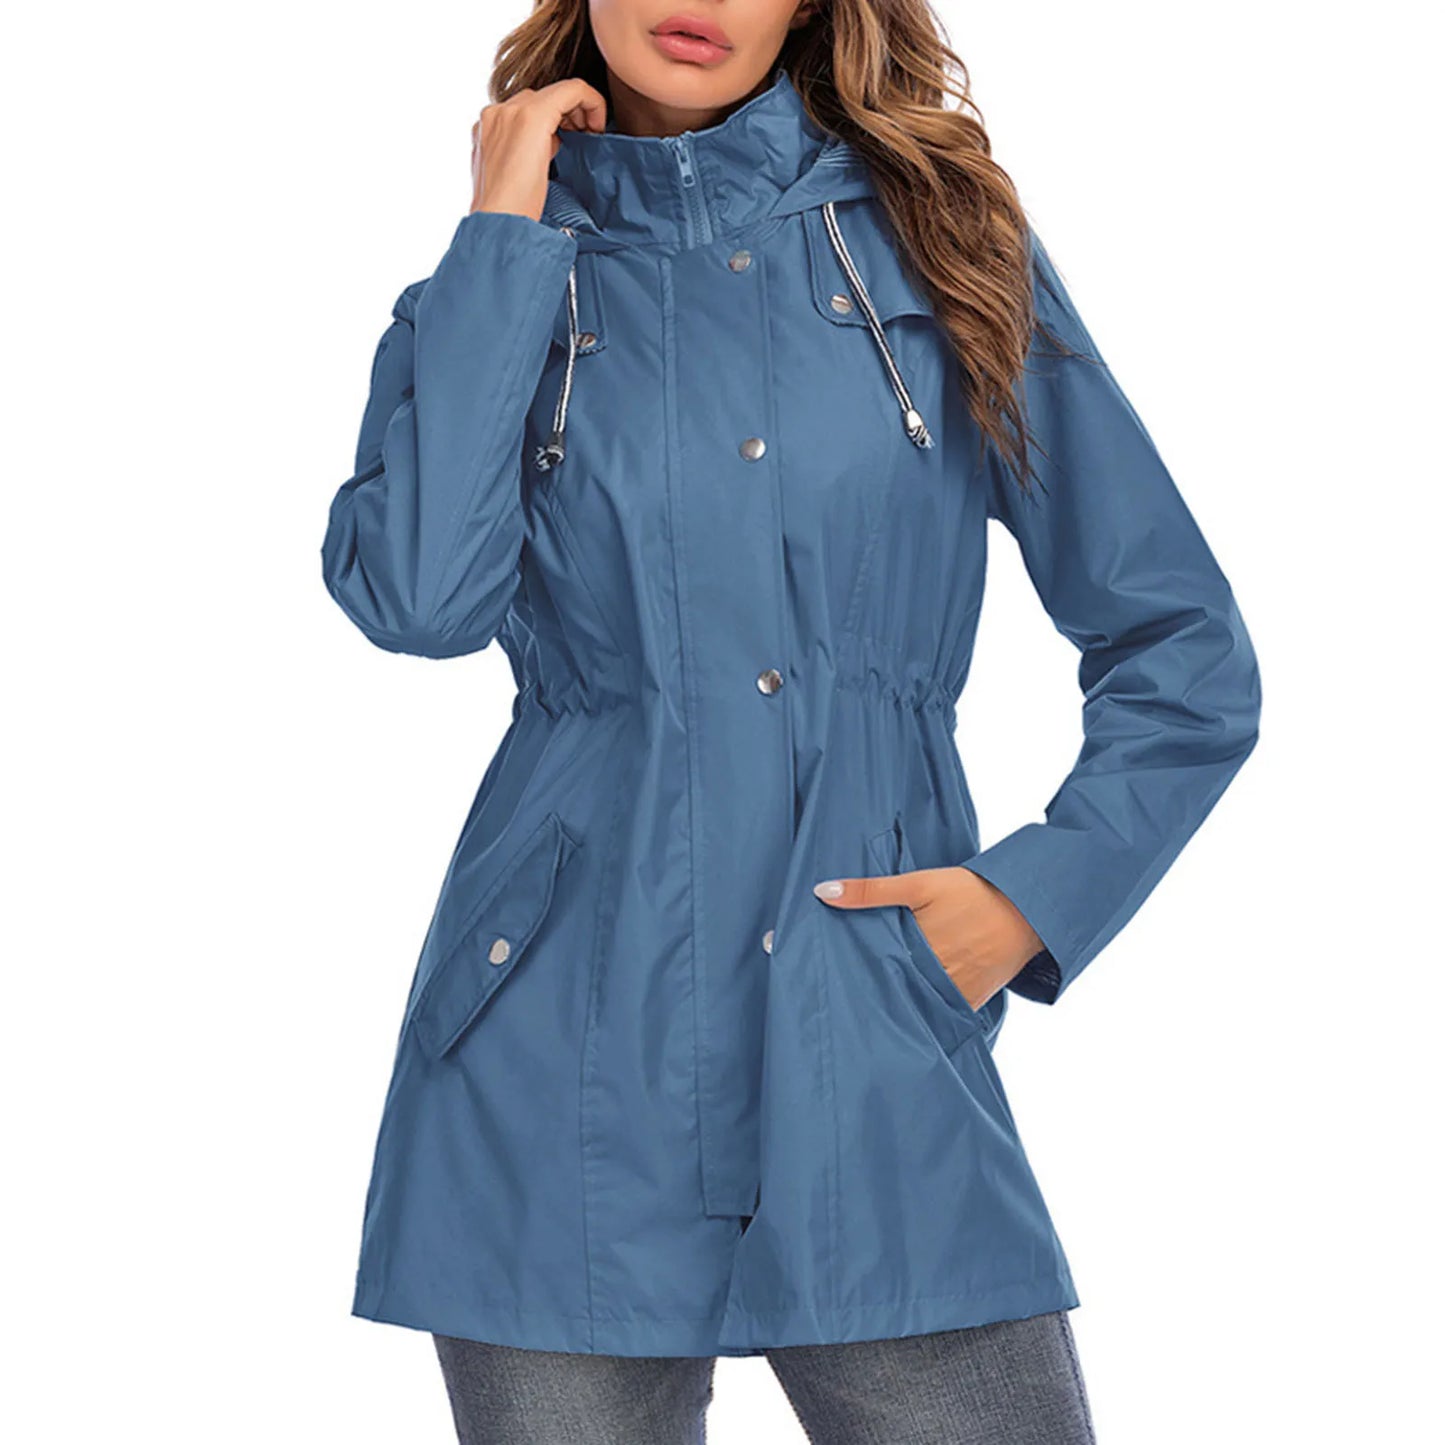 Women's Casual Lightweight Raincoat/Solid Color Long Hooded Outdoor Windbreaker